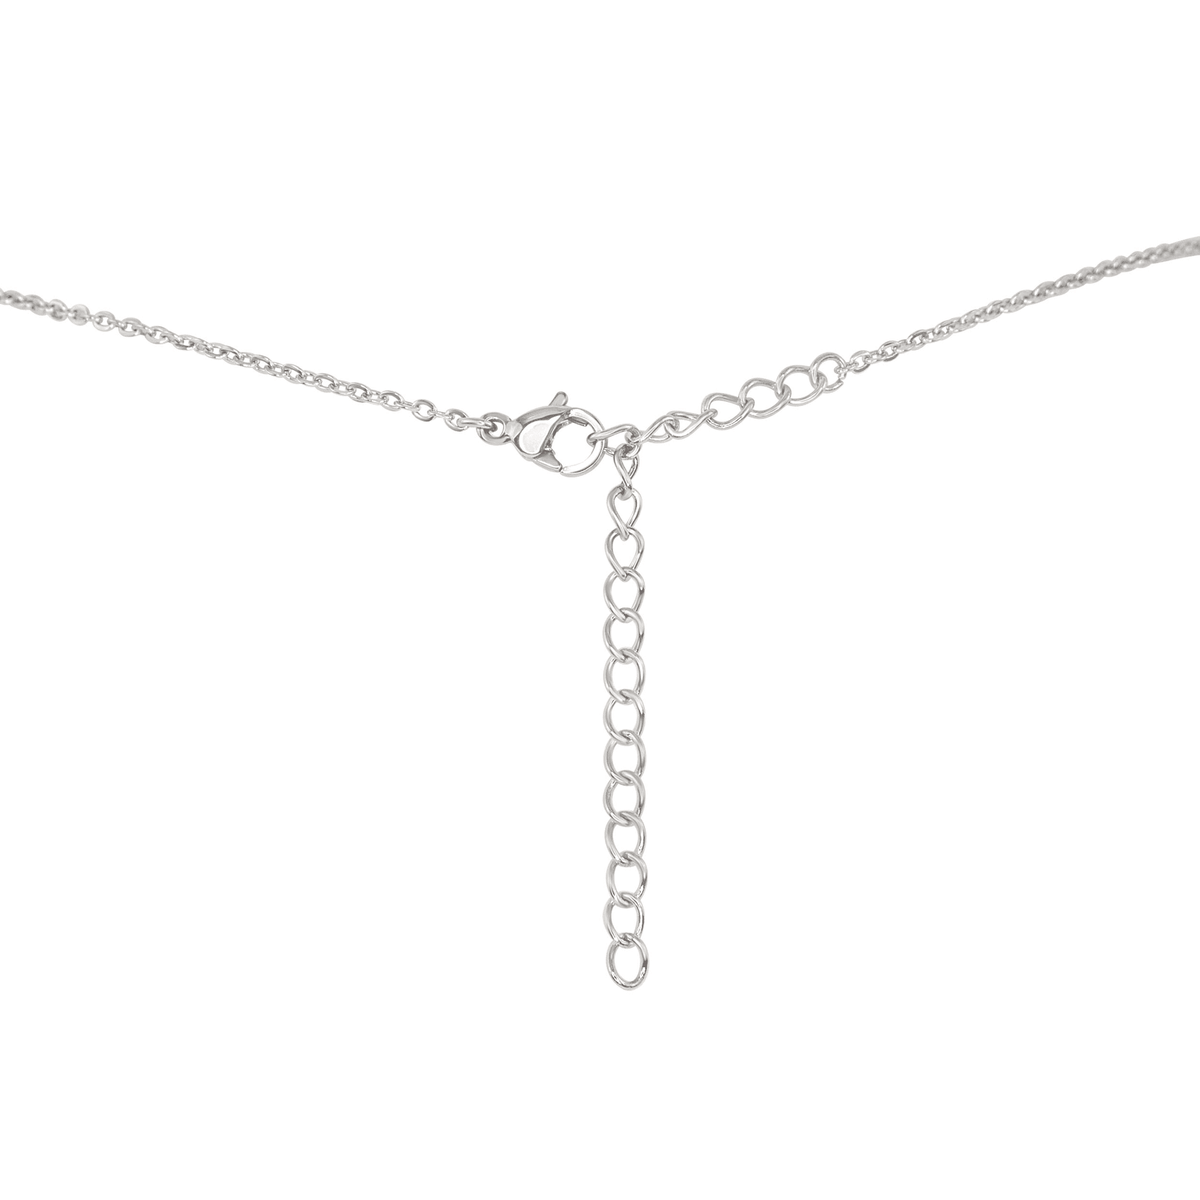 Tiny Black Tourmaline Teardrop Necklace - Tiny Black Tourmaline Teardrop Necklace - Sterling Silver / Cable - Luna Tide Handmade Crystal Jewellery